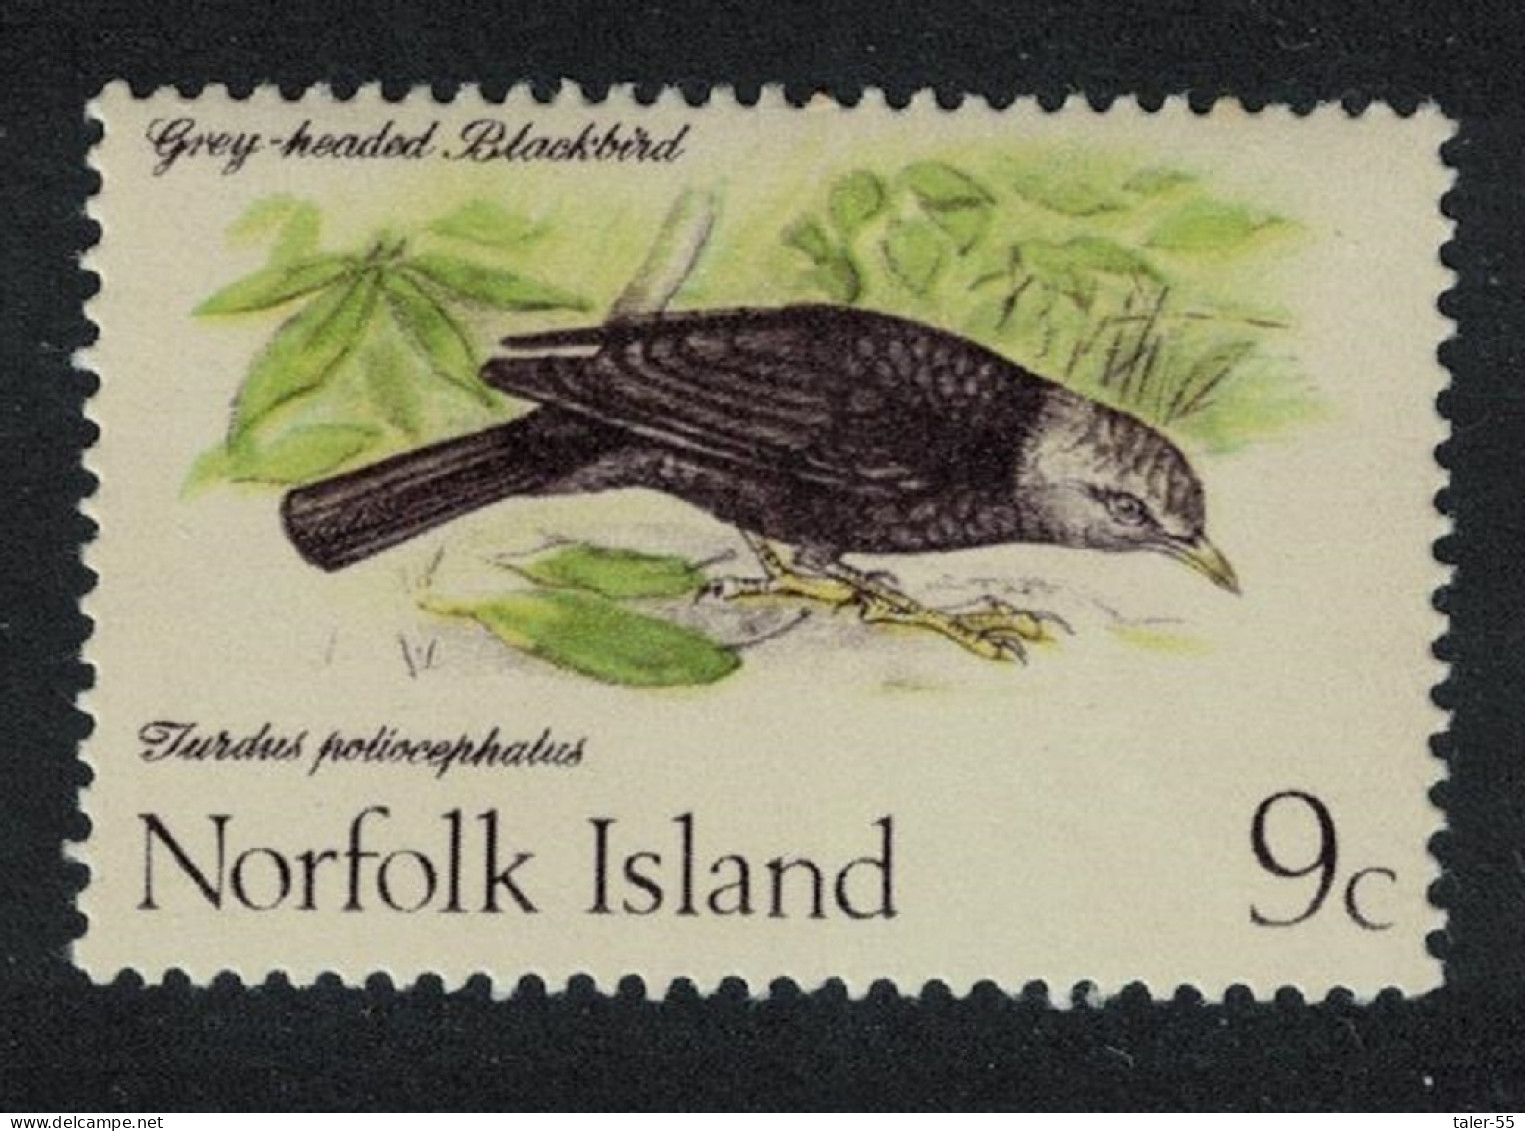 Norfolk Island Thrush Bird 9c 1970 MNH SG#109 - Norfolkinsel